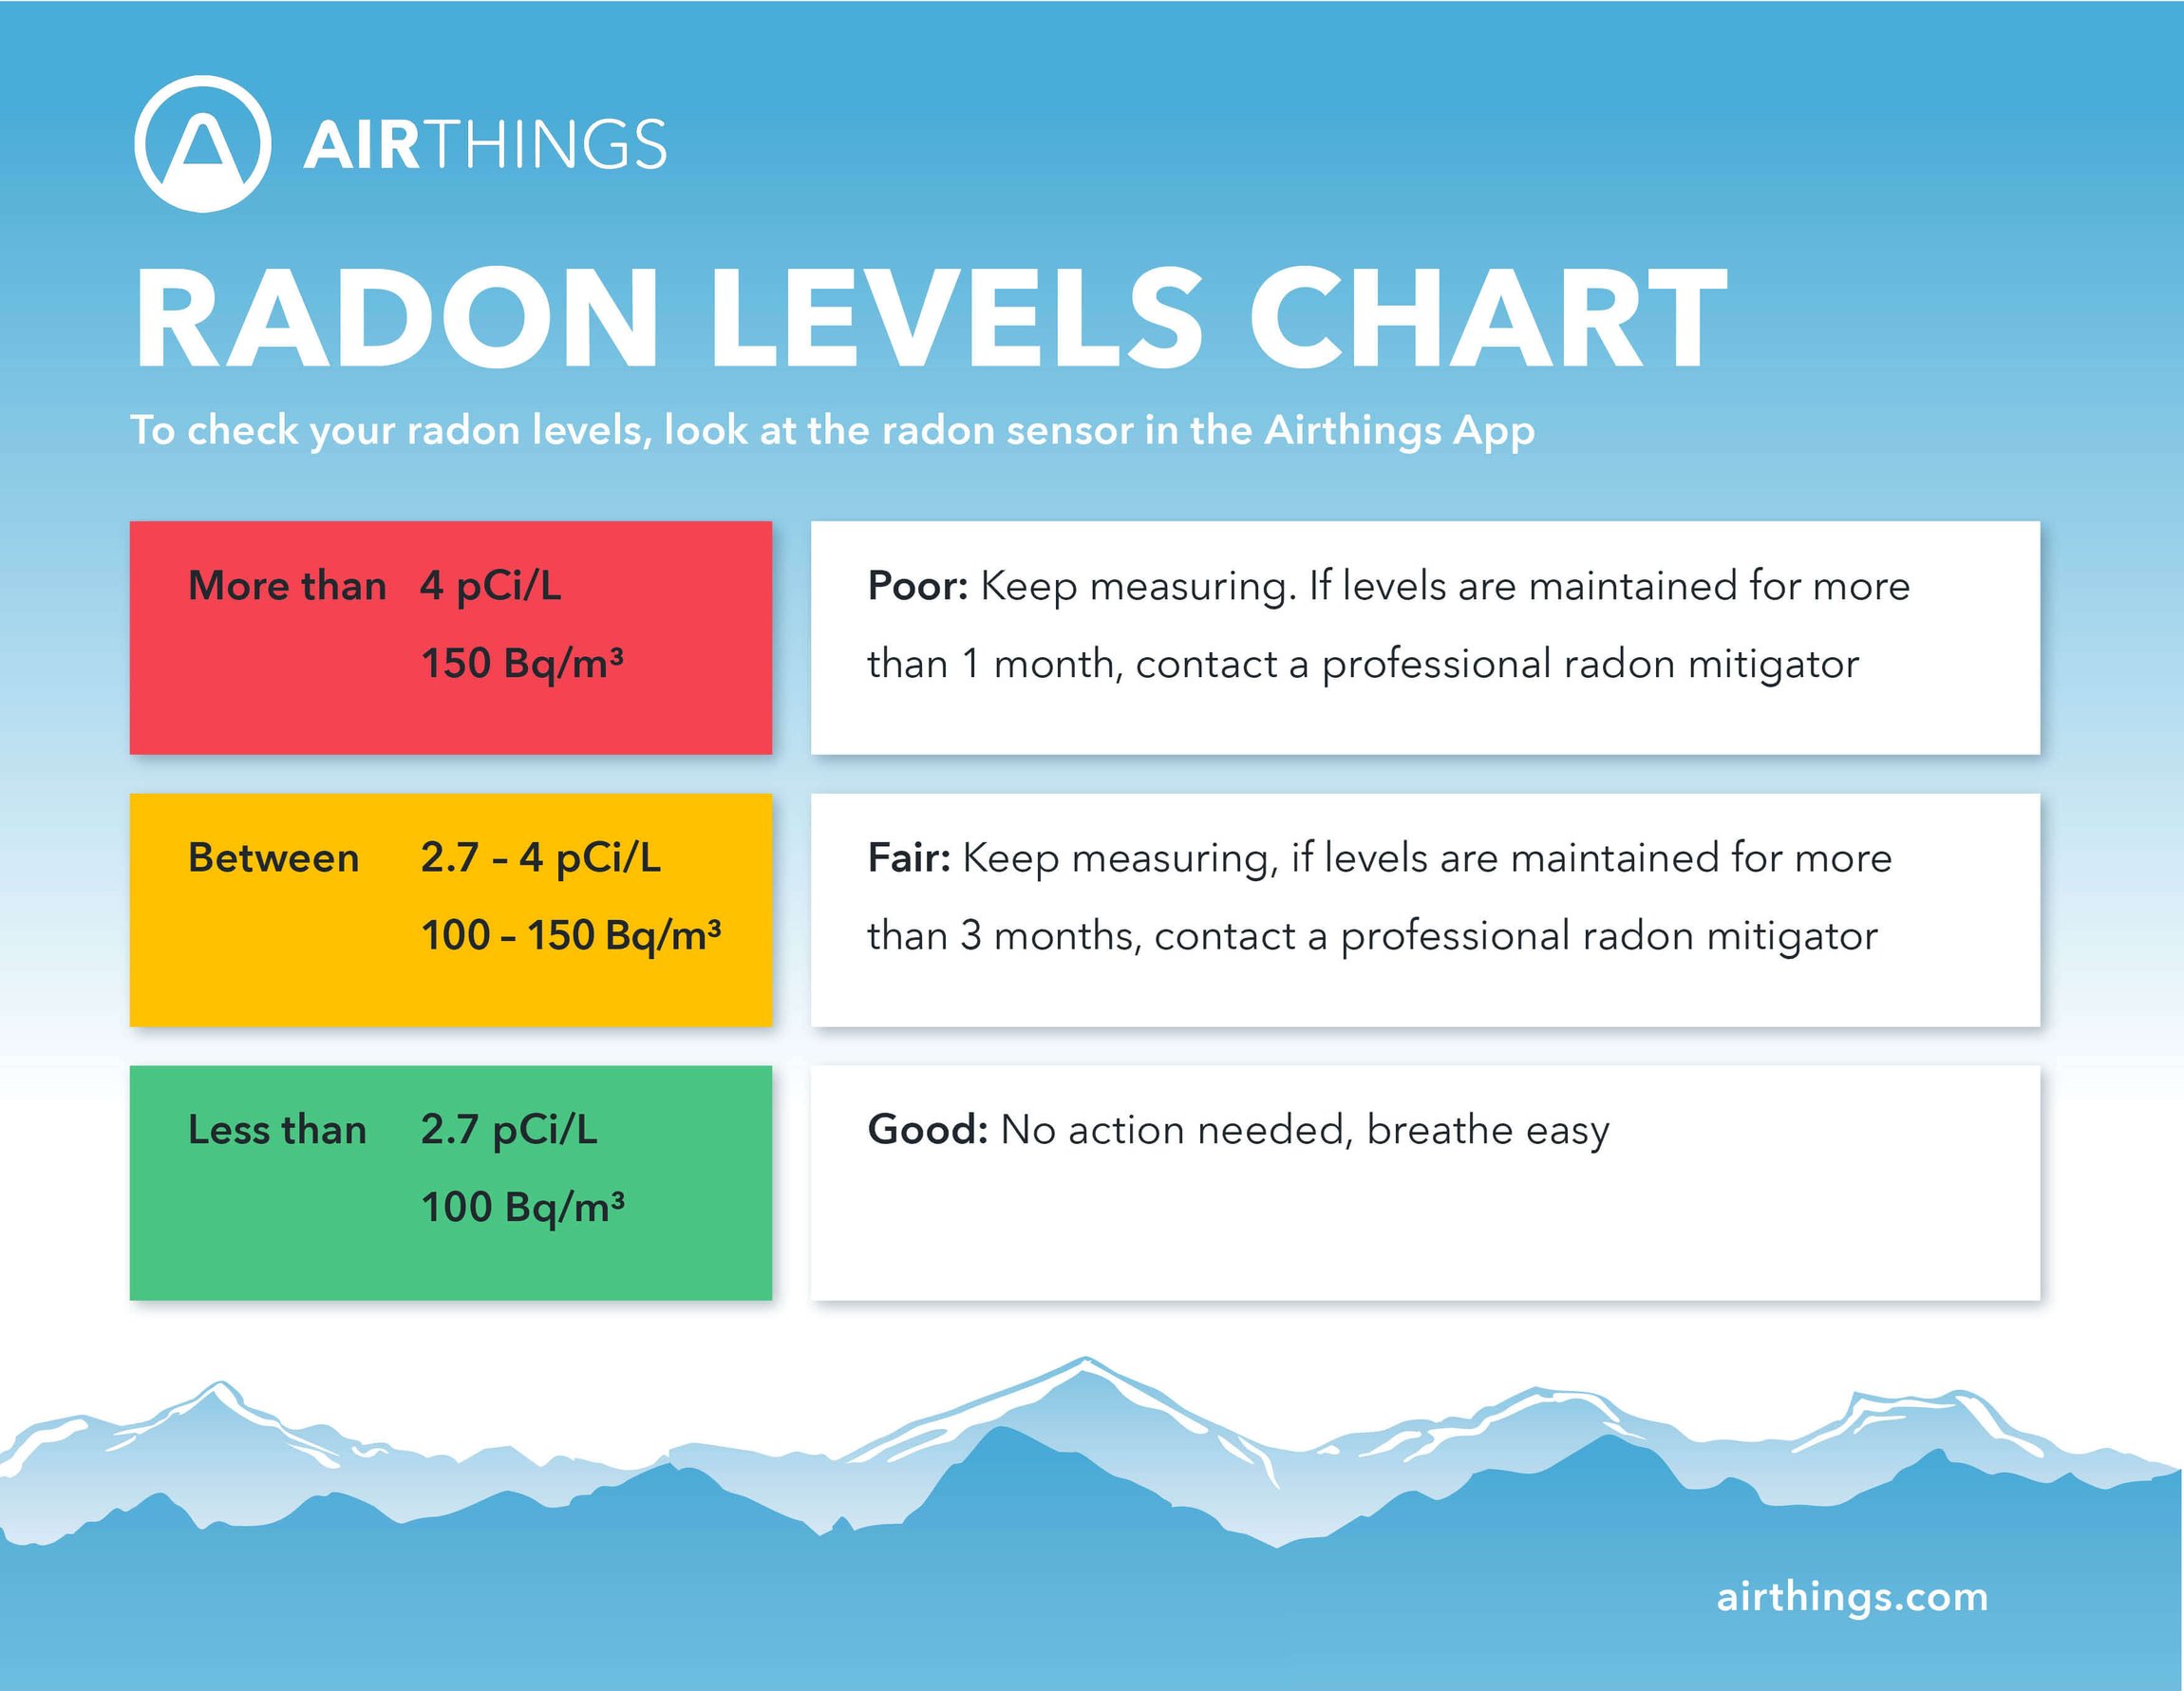 Radon levels